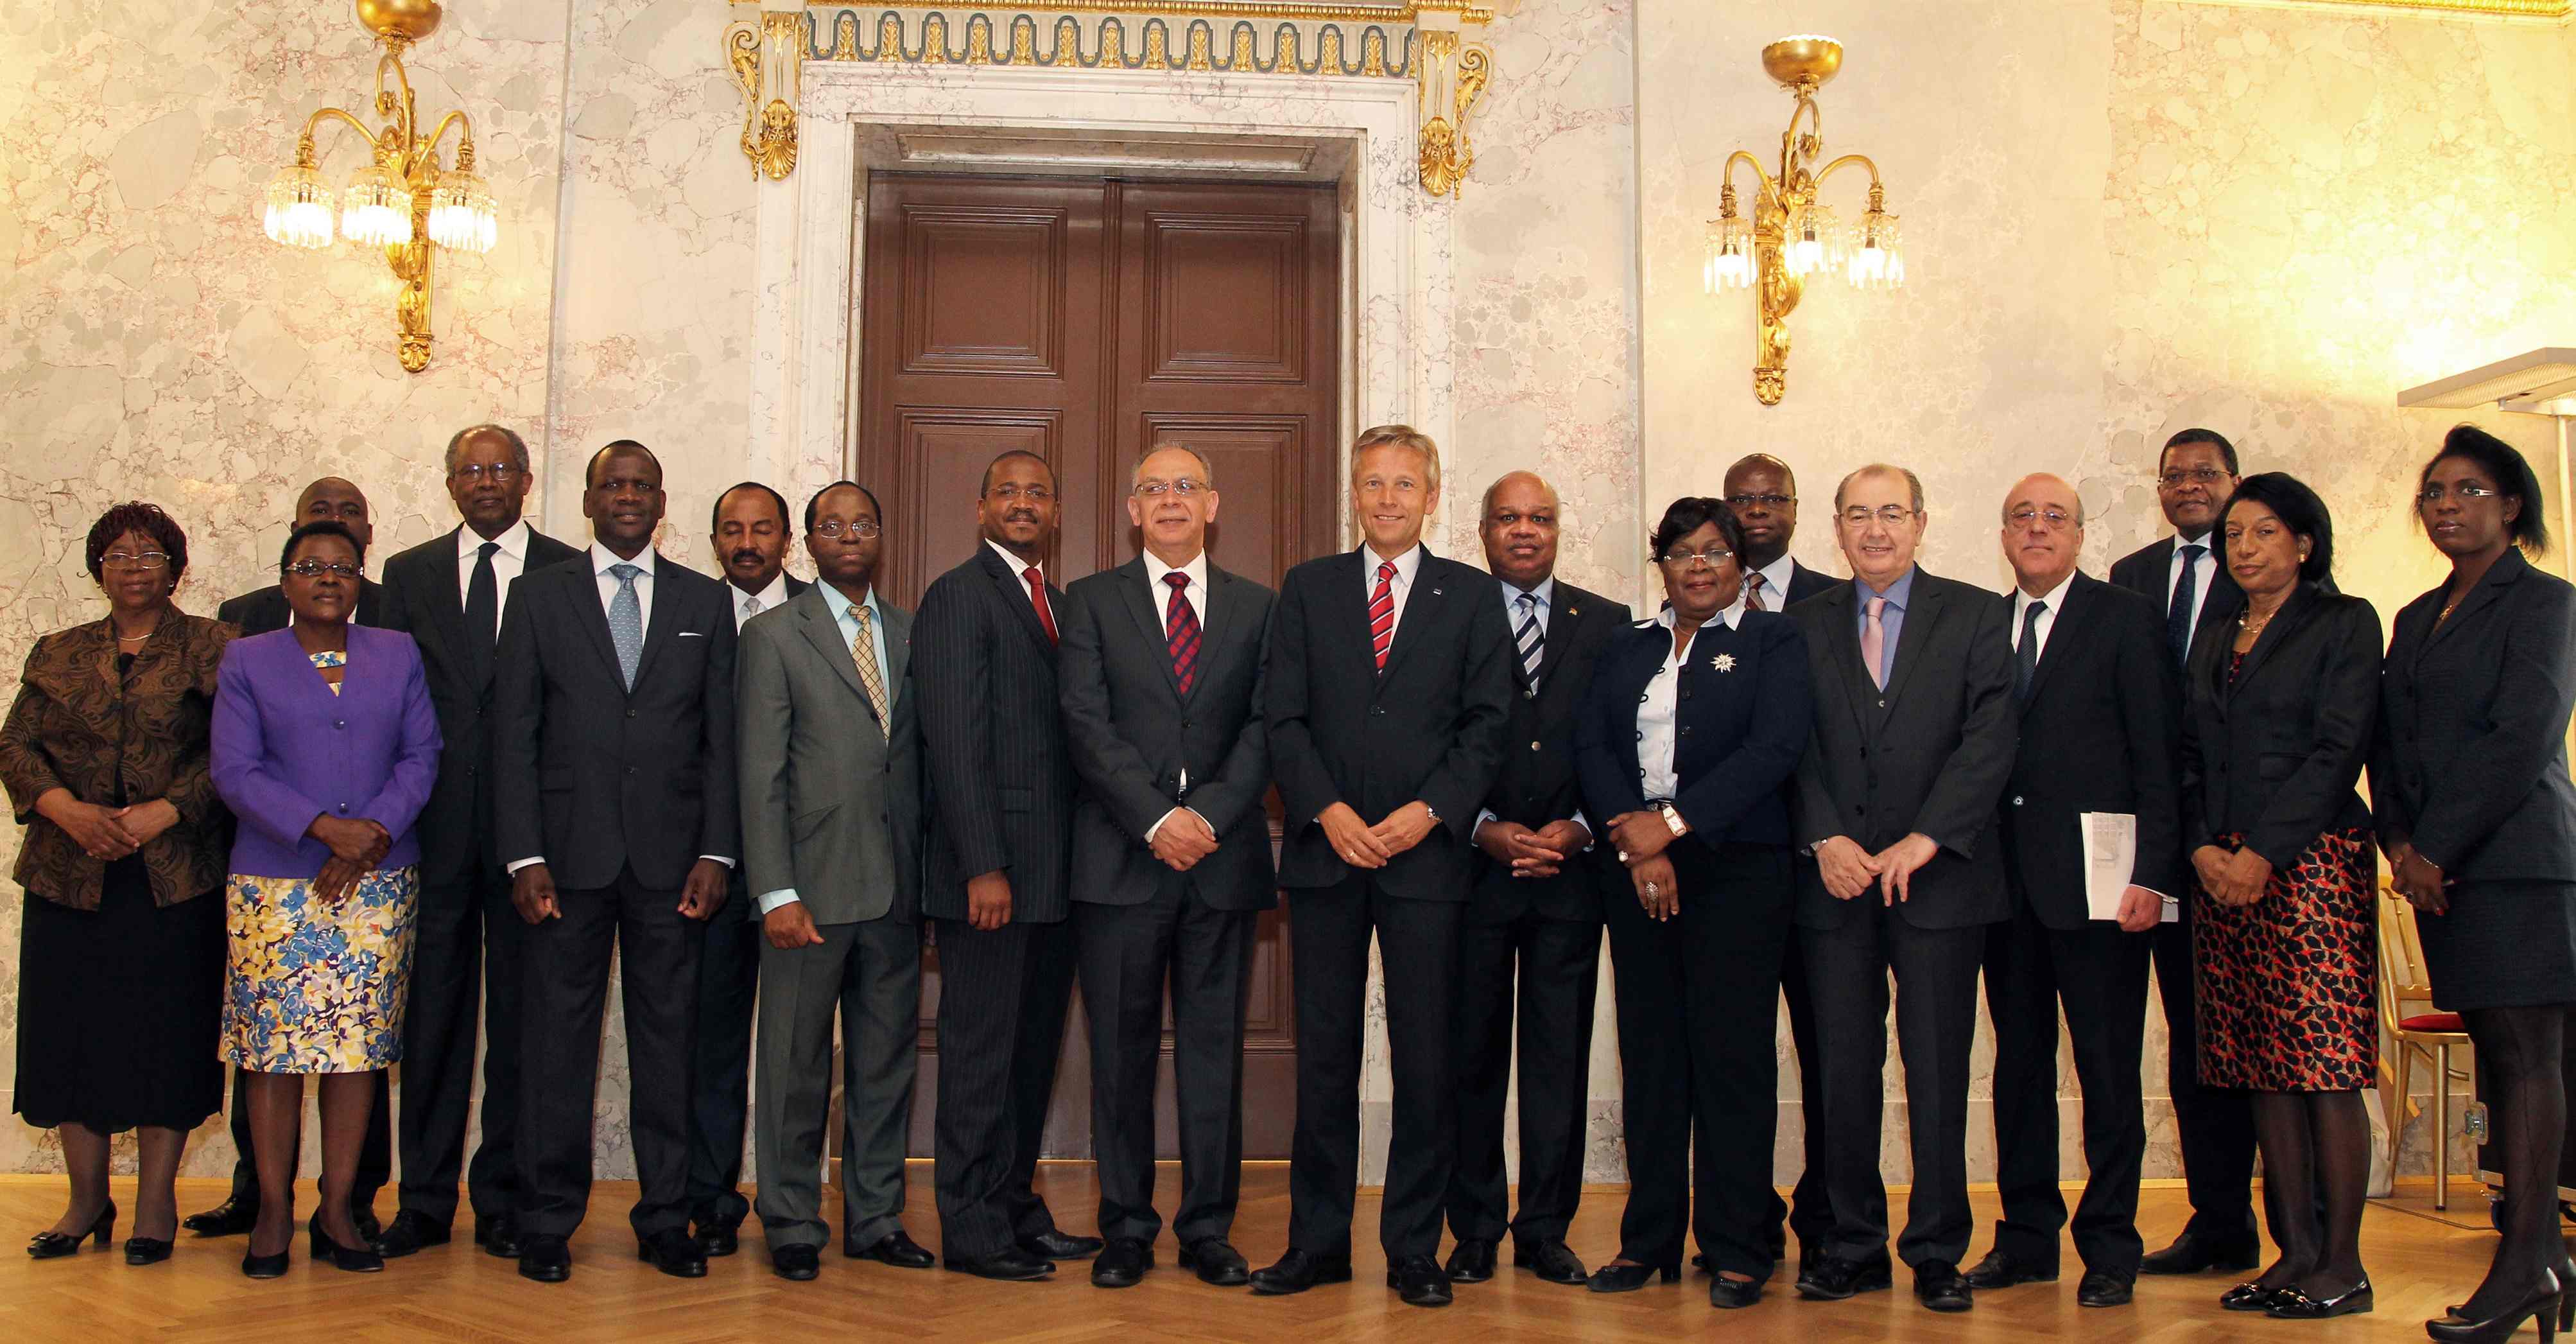 (c) BMEIA, STS Lopatka trifft afrikanische Botschafter in Wien